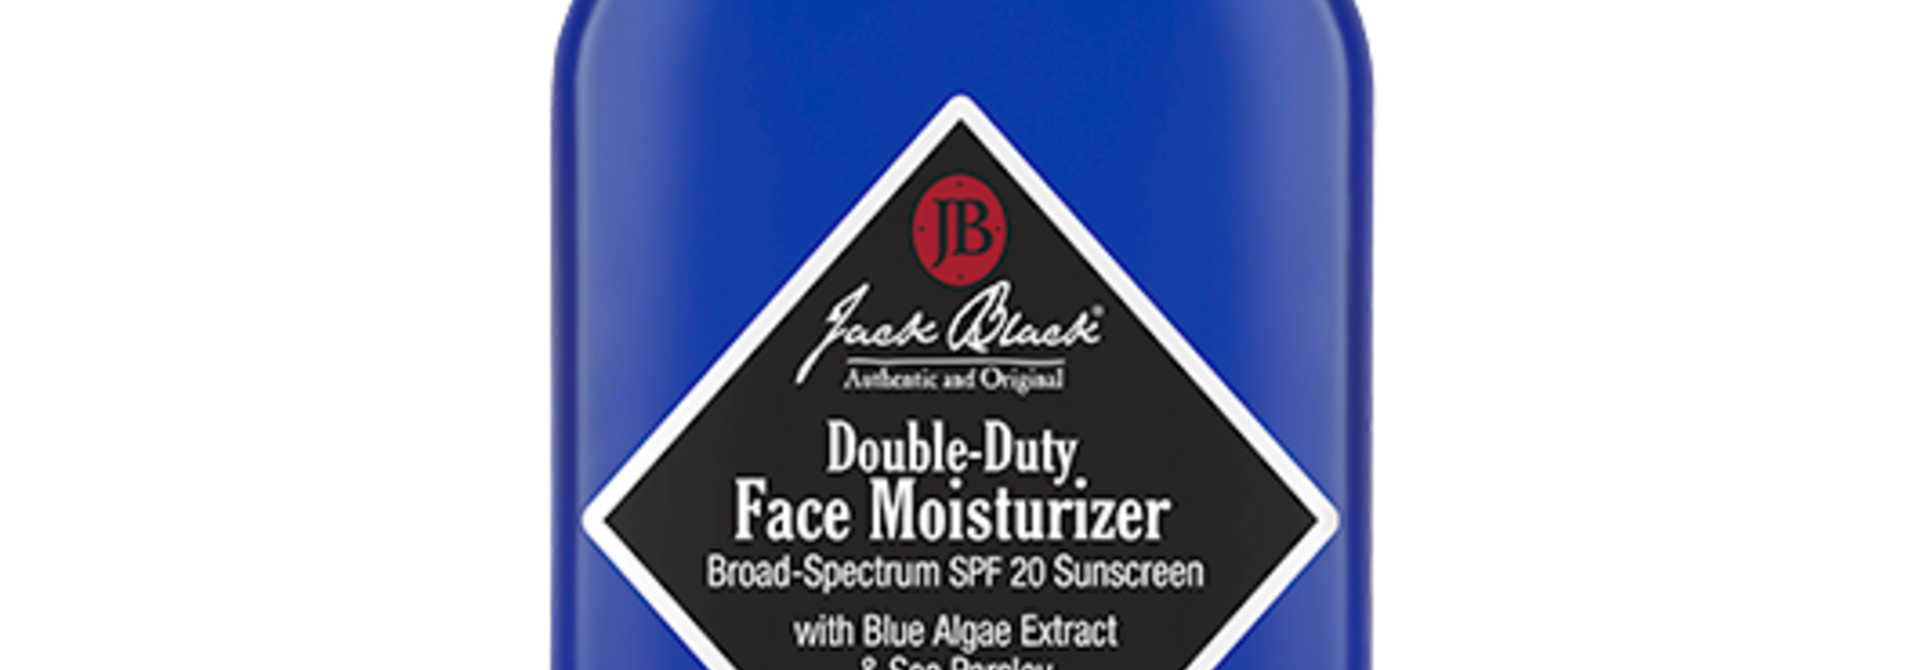 Double-Duty Face Moisturizer SPF 20 | The Facial Skincare Collection